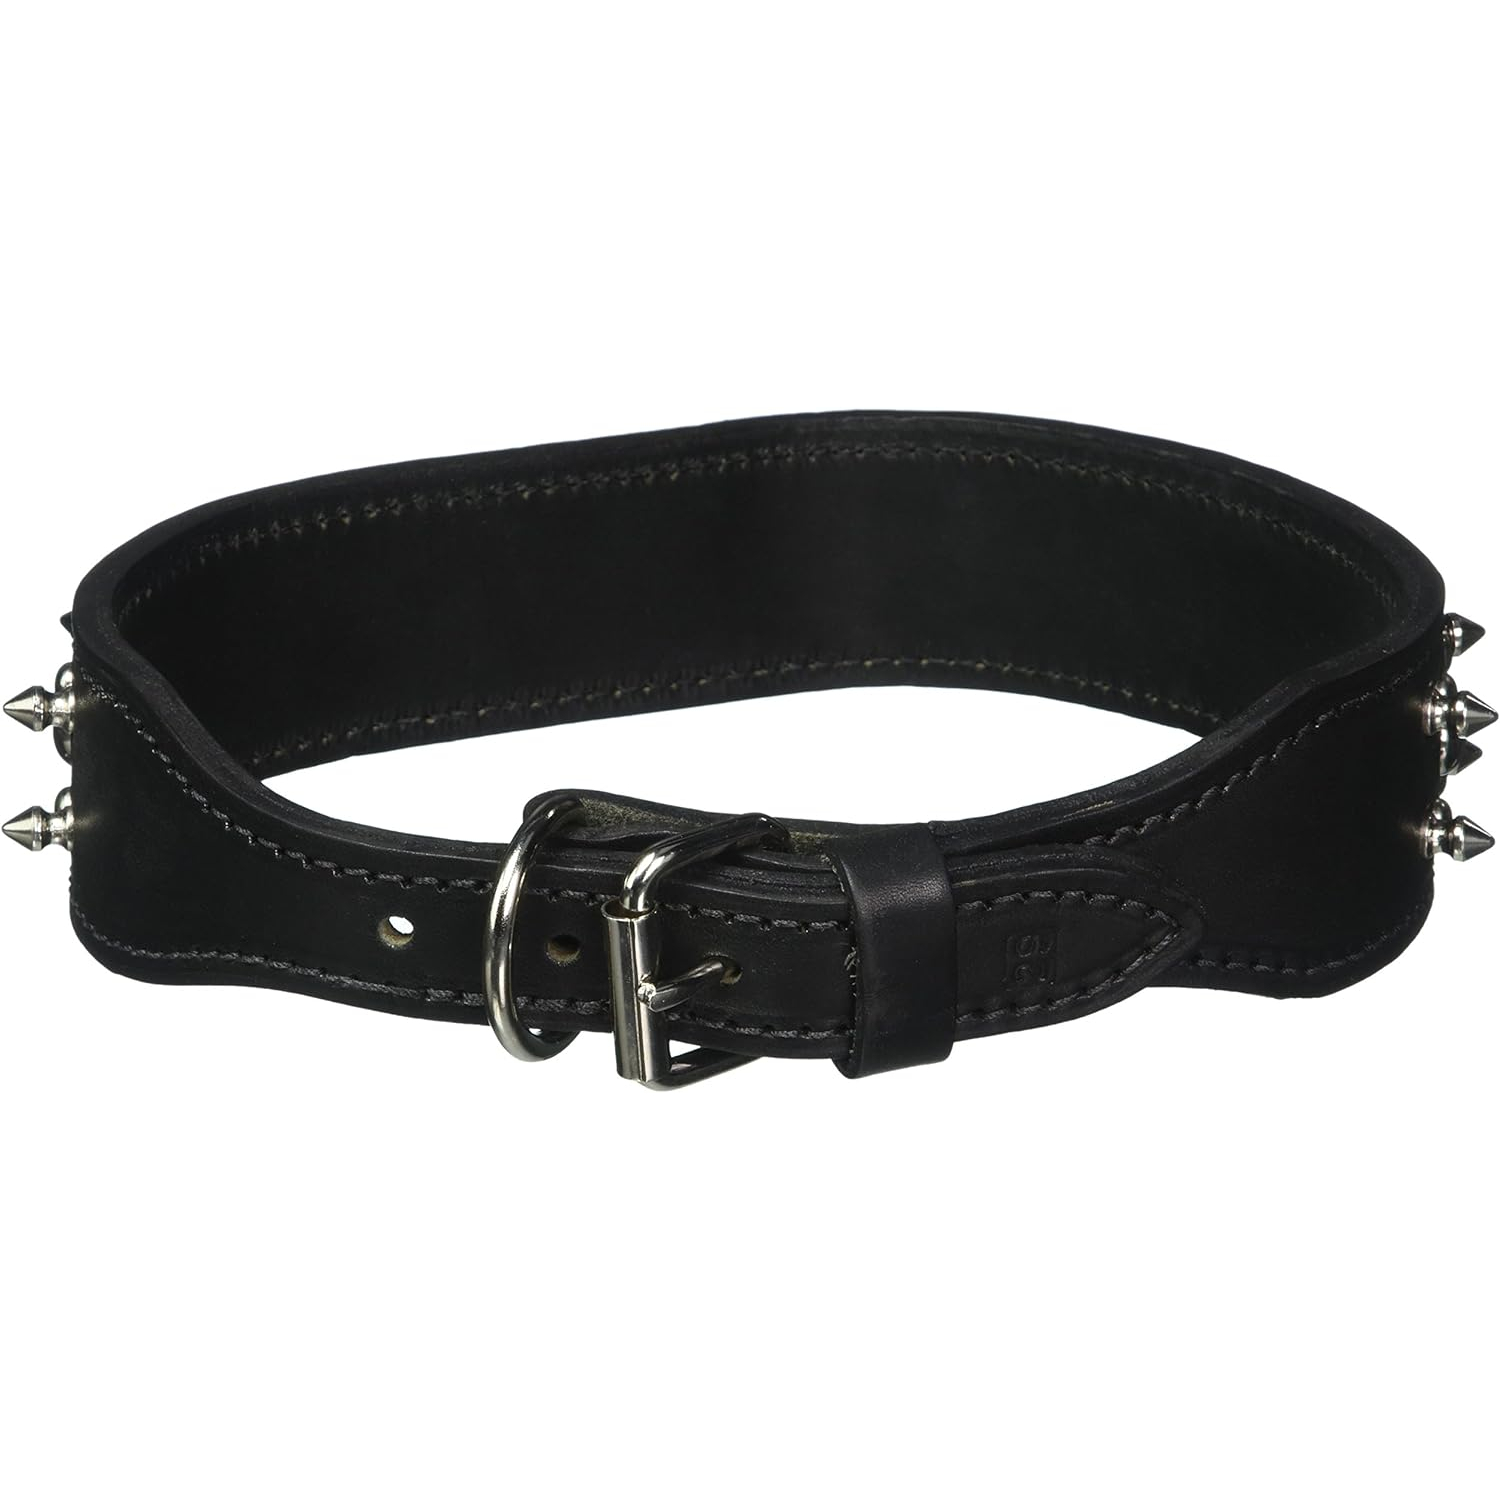 OmniPet Spiked & Studded Latigo Leather Dog Collar